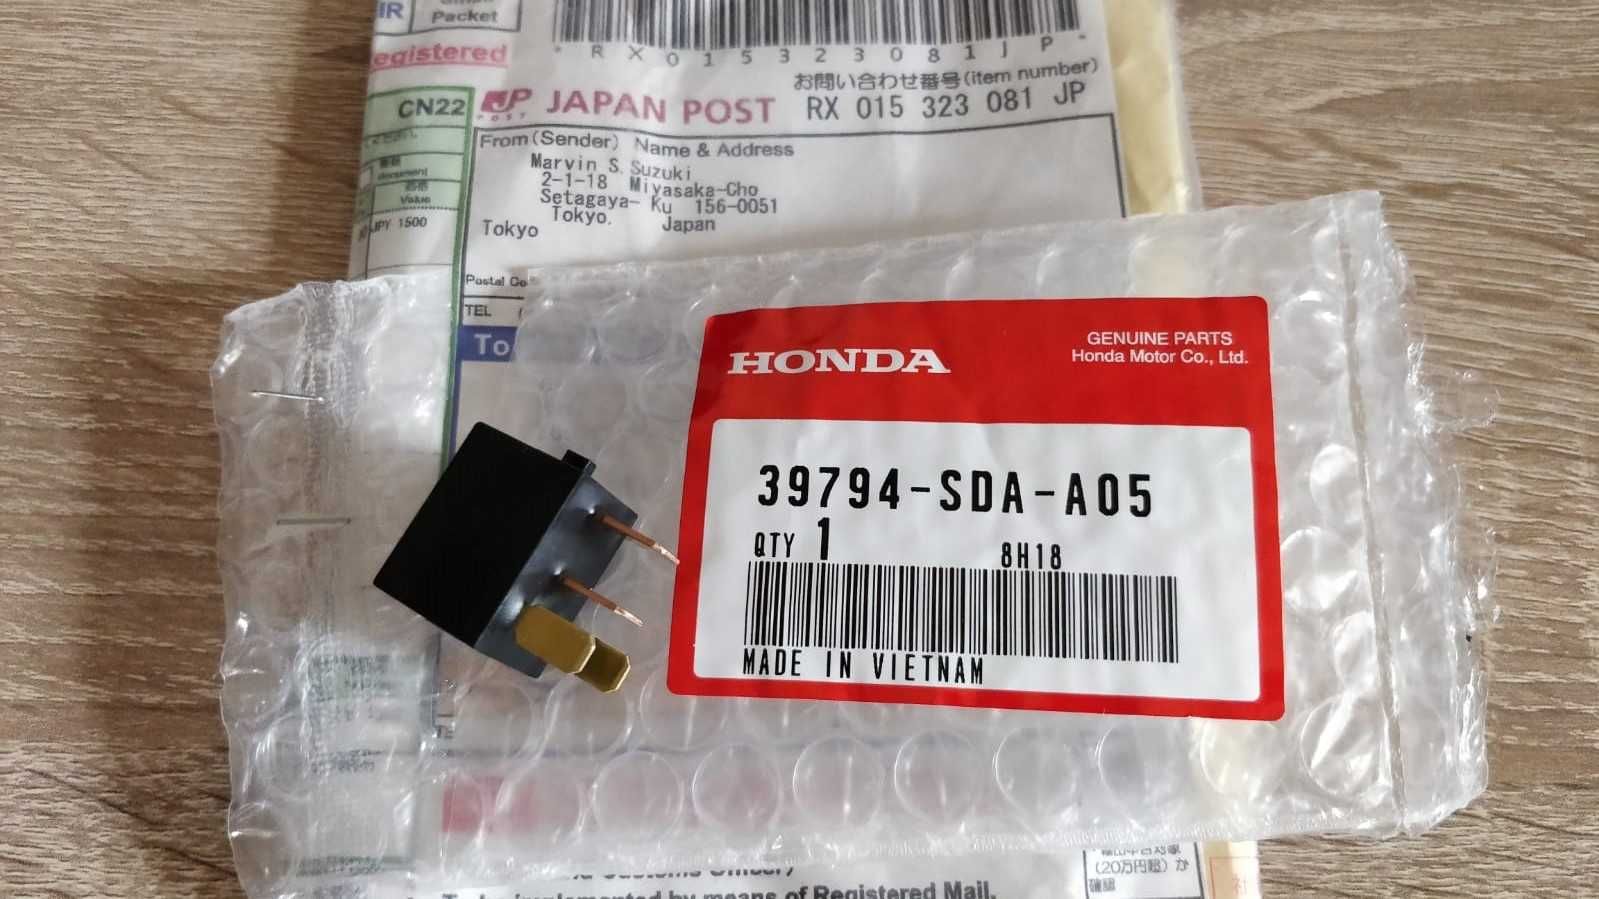 Releu Honda aer conditionat Mitsuba 39794-SDA-A05 (Omron G8HL-H71)